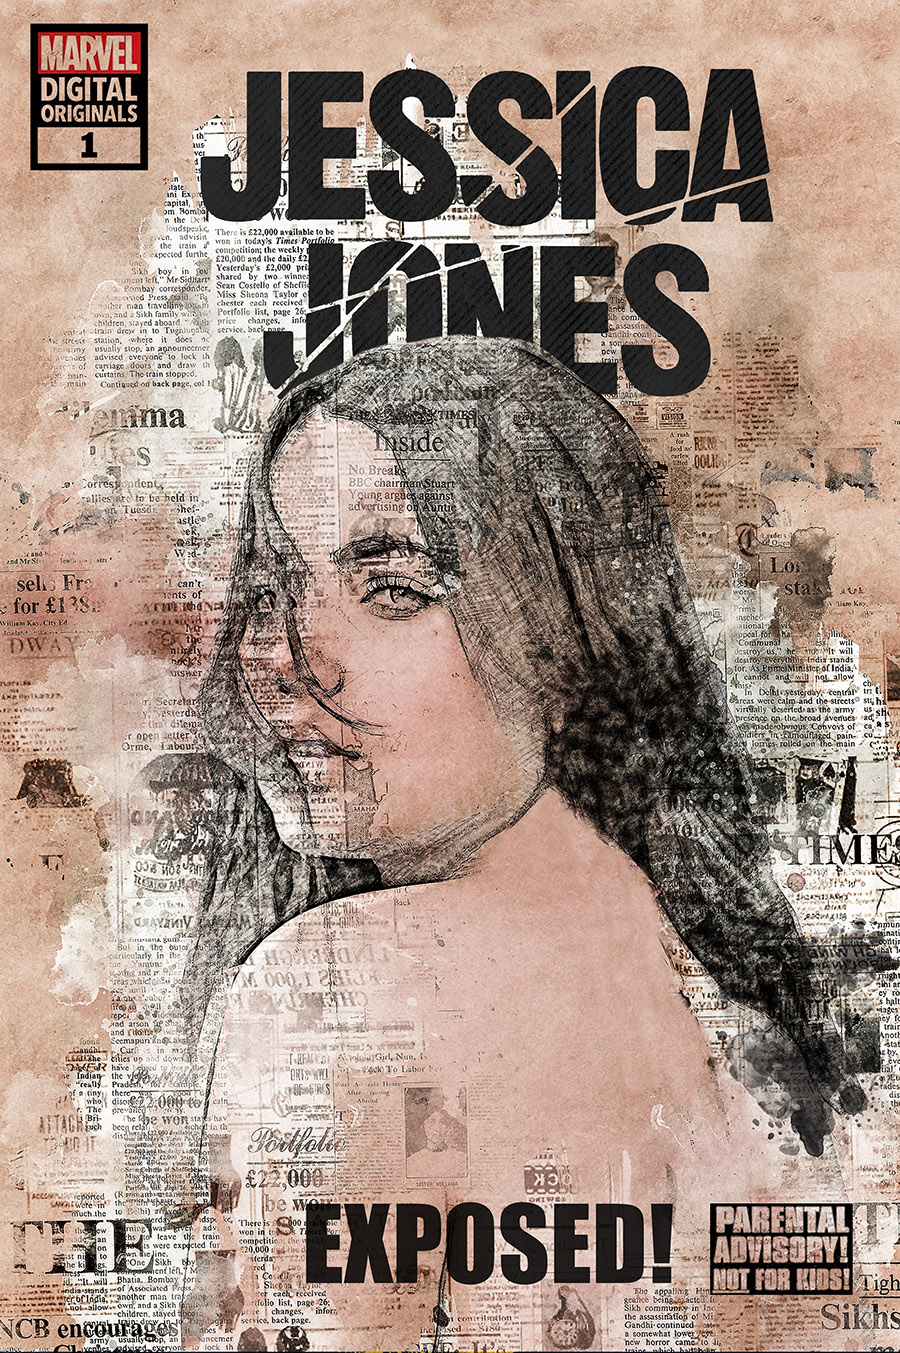 Jessica Jones · Exposed